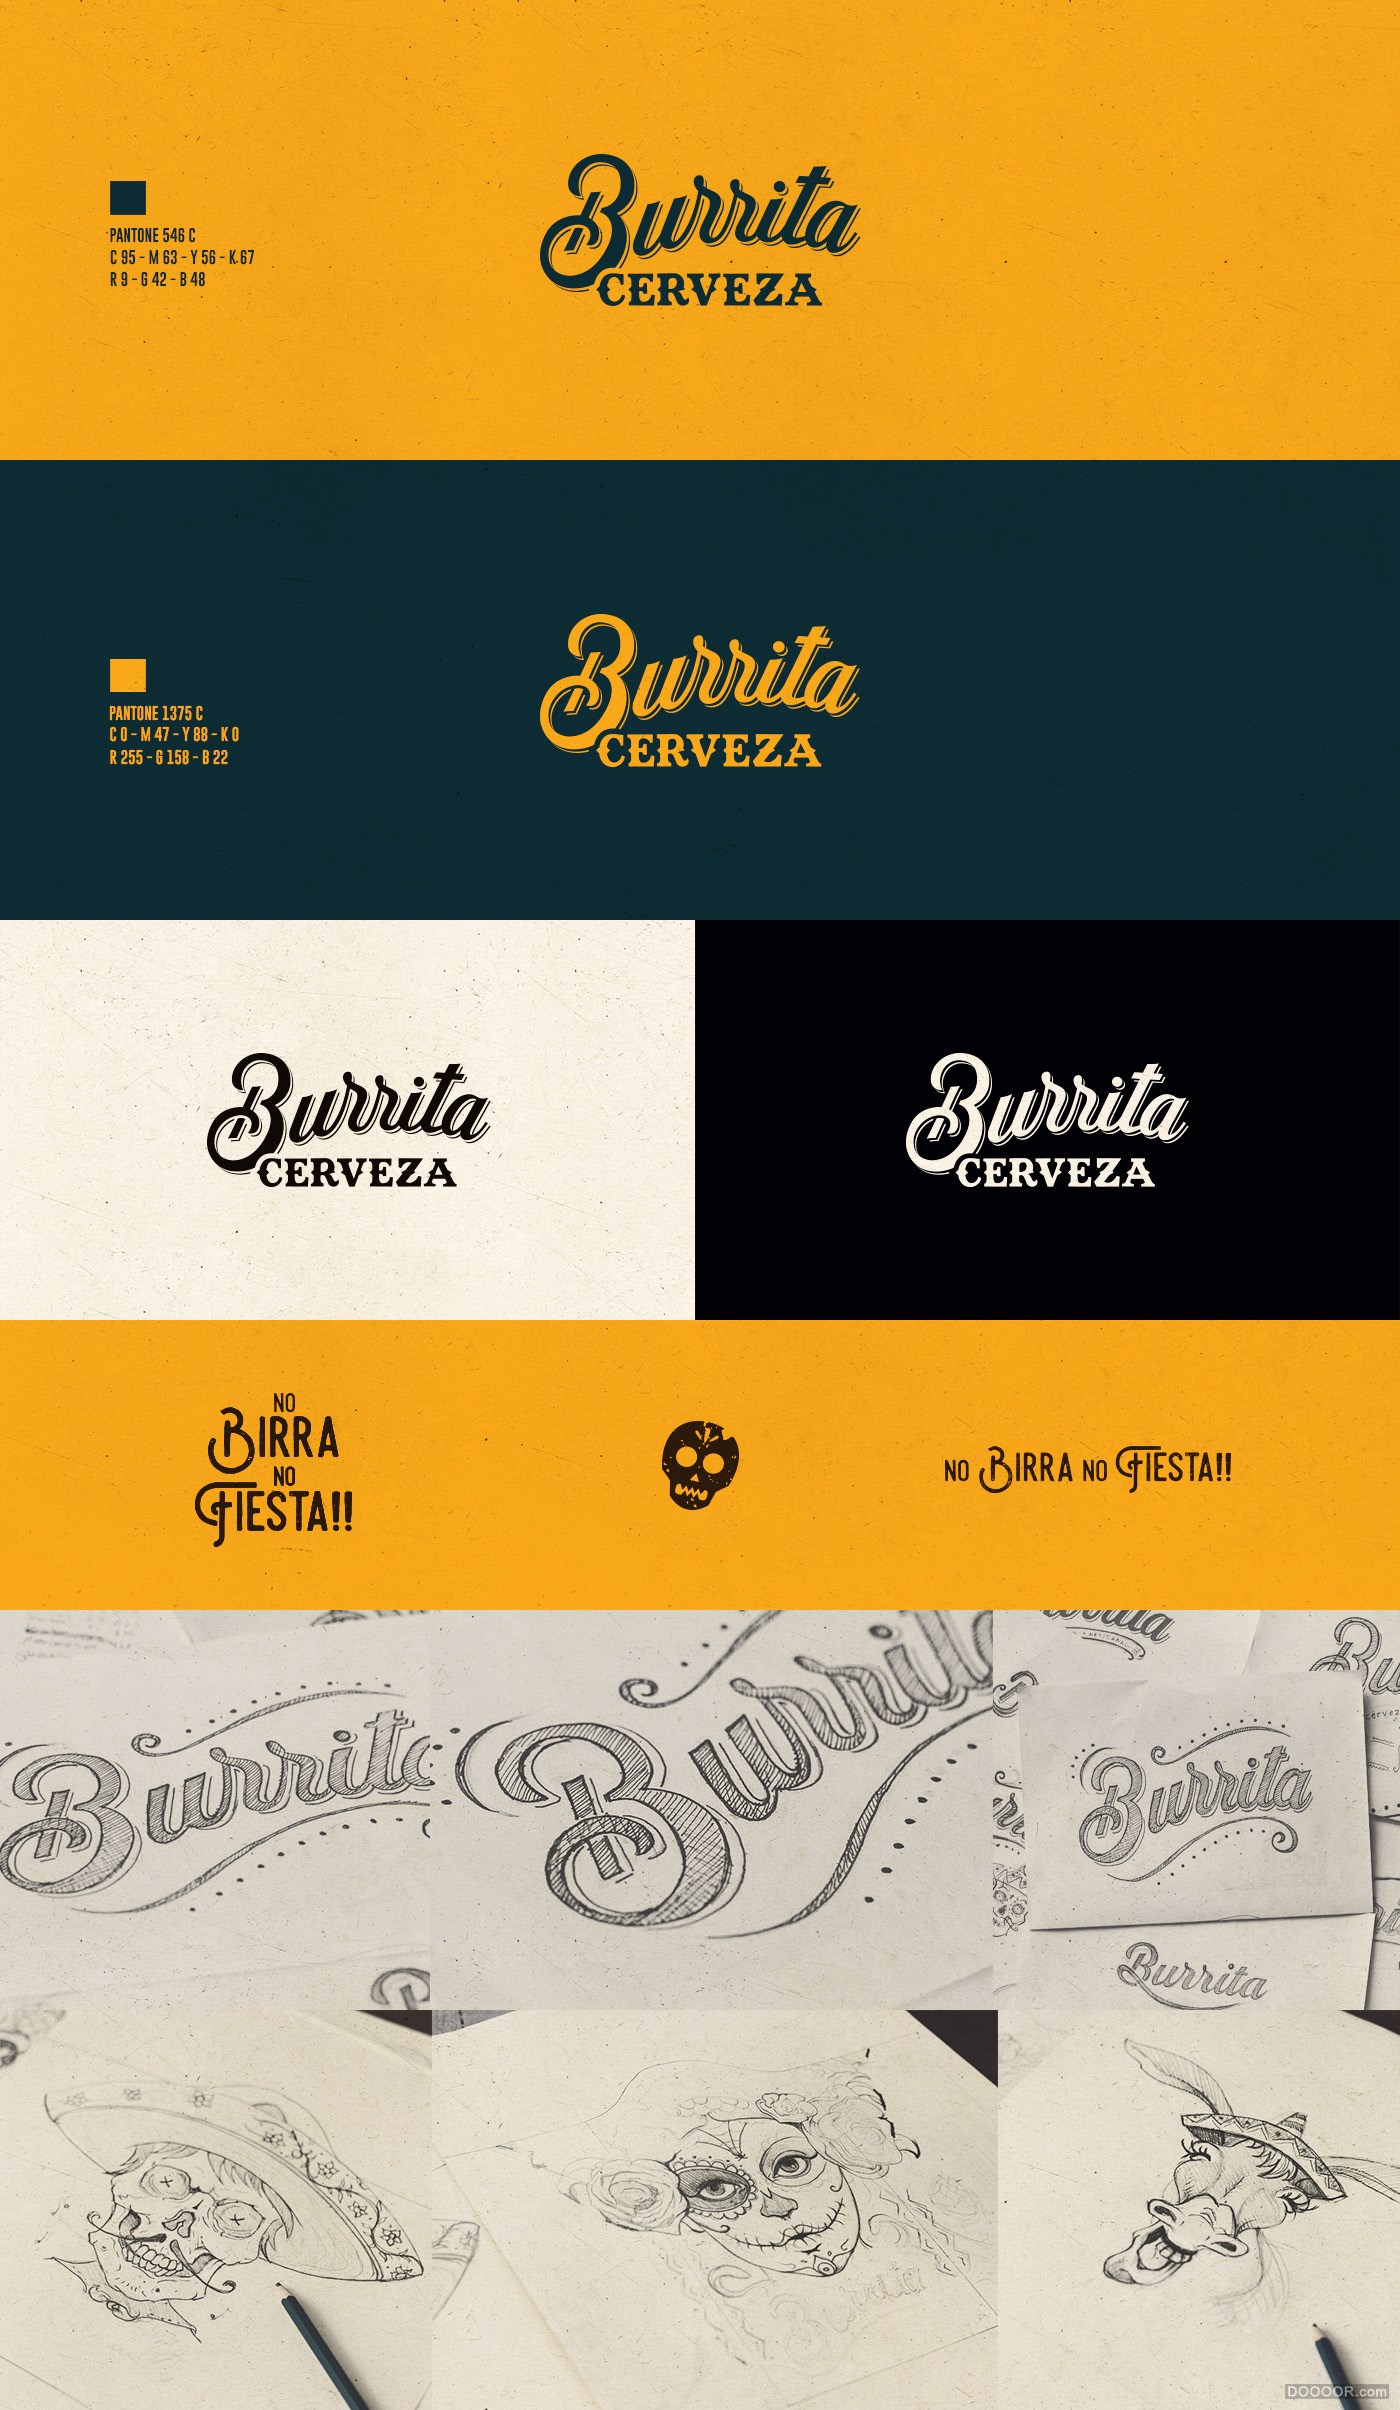 Burrita啤酒个性化系列插画标签设计-Matias Harina [9P] (3).jpg